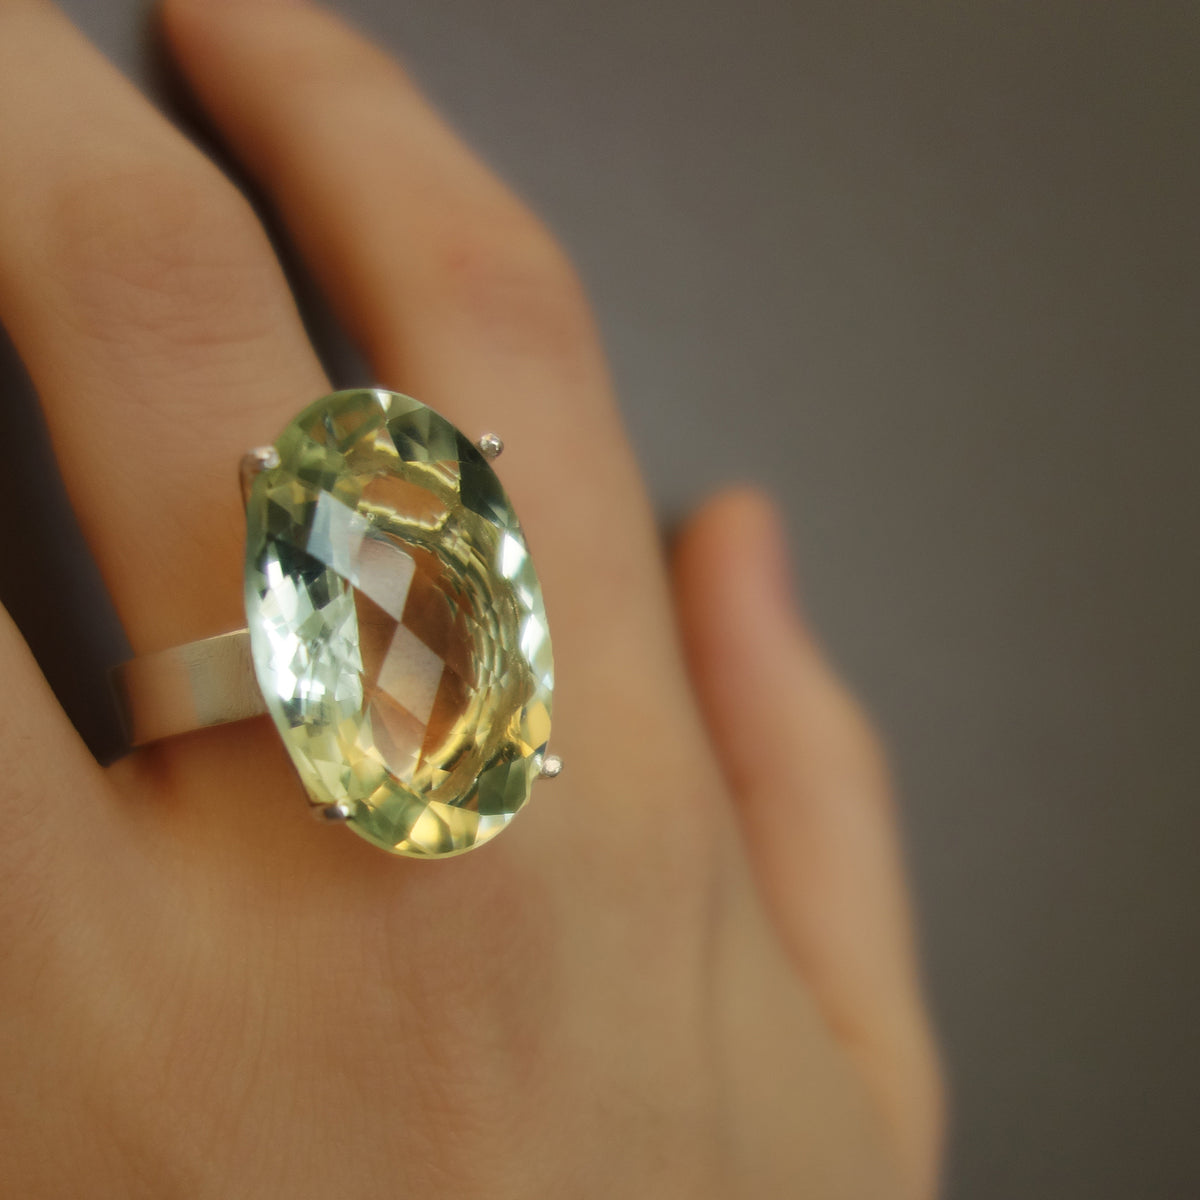 Faceted Presiolite (green amethyst) bejeweled ring